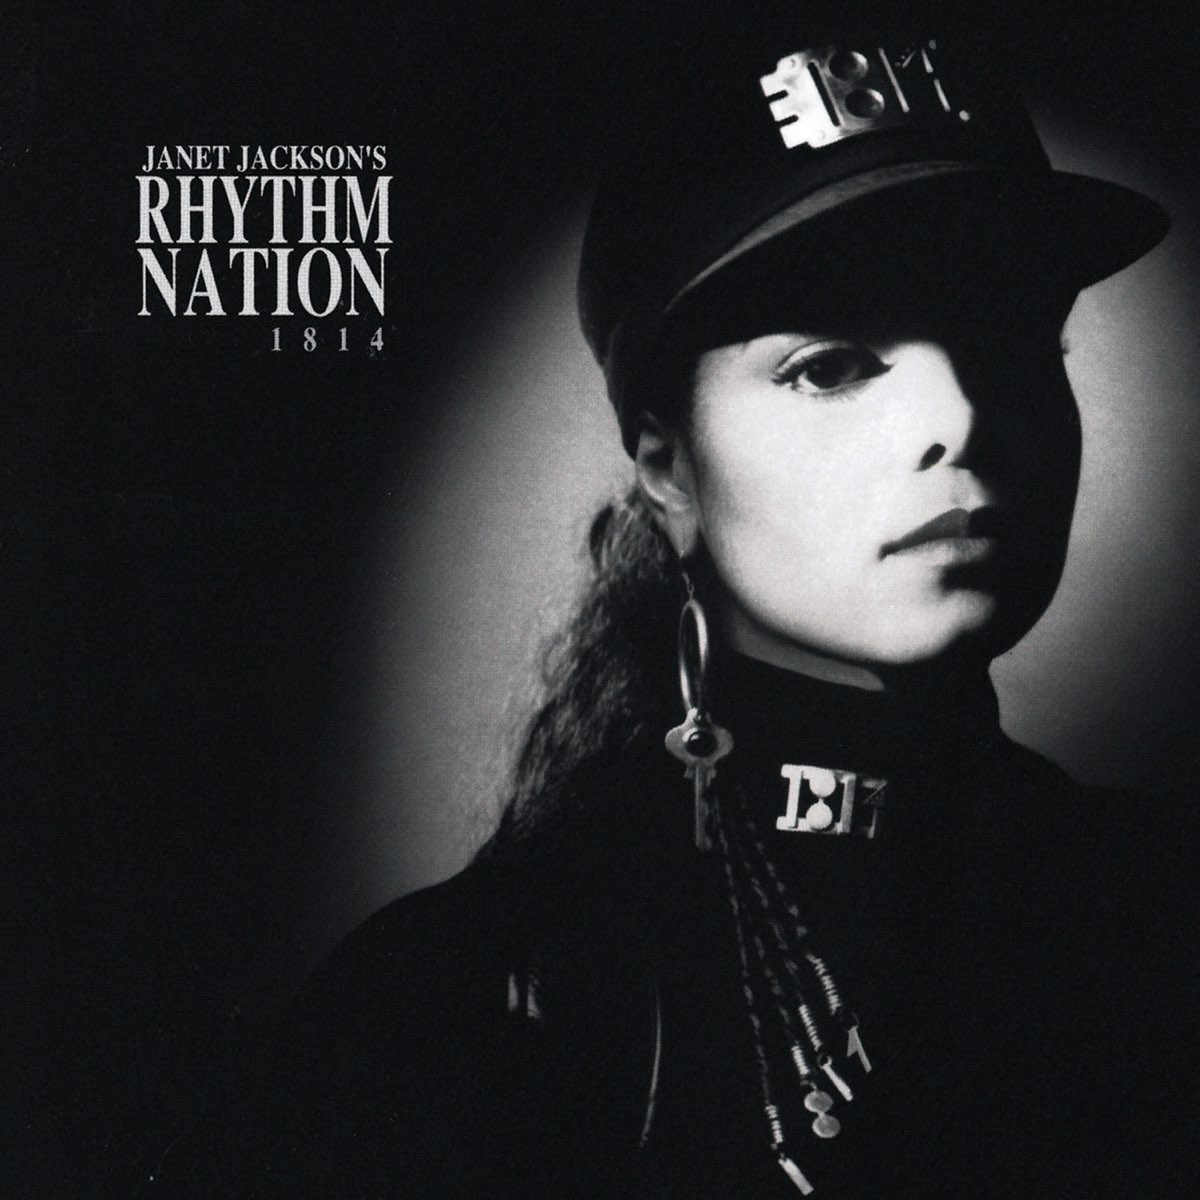 Rhythm Nation 1814 - Album by Janet Jackson - Apple Music